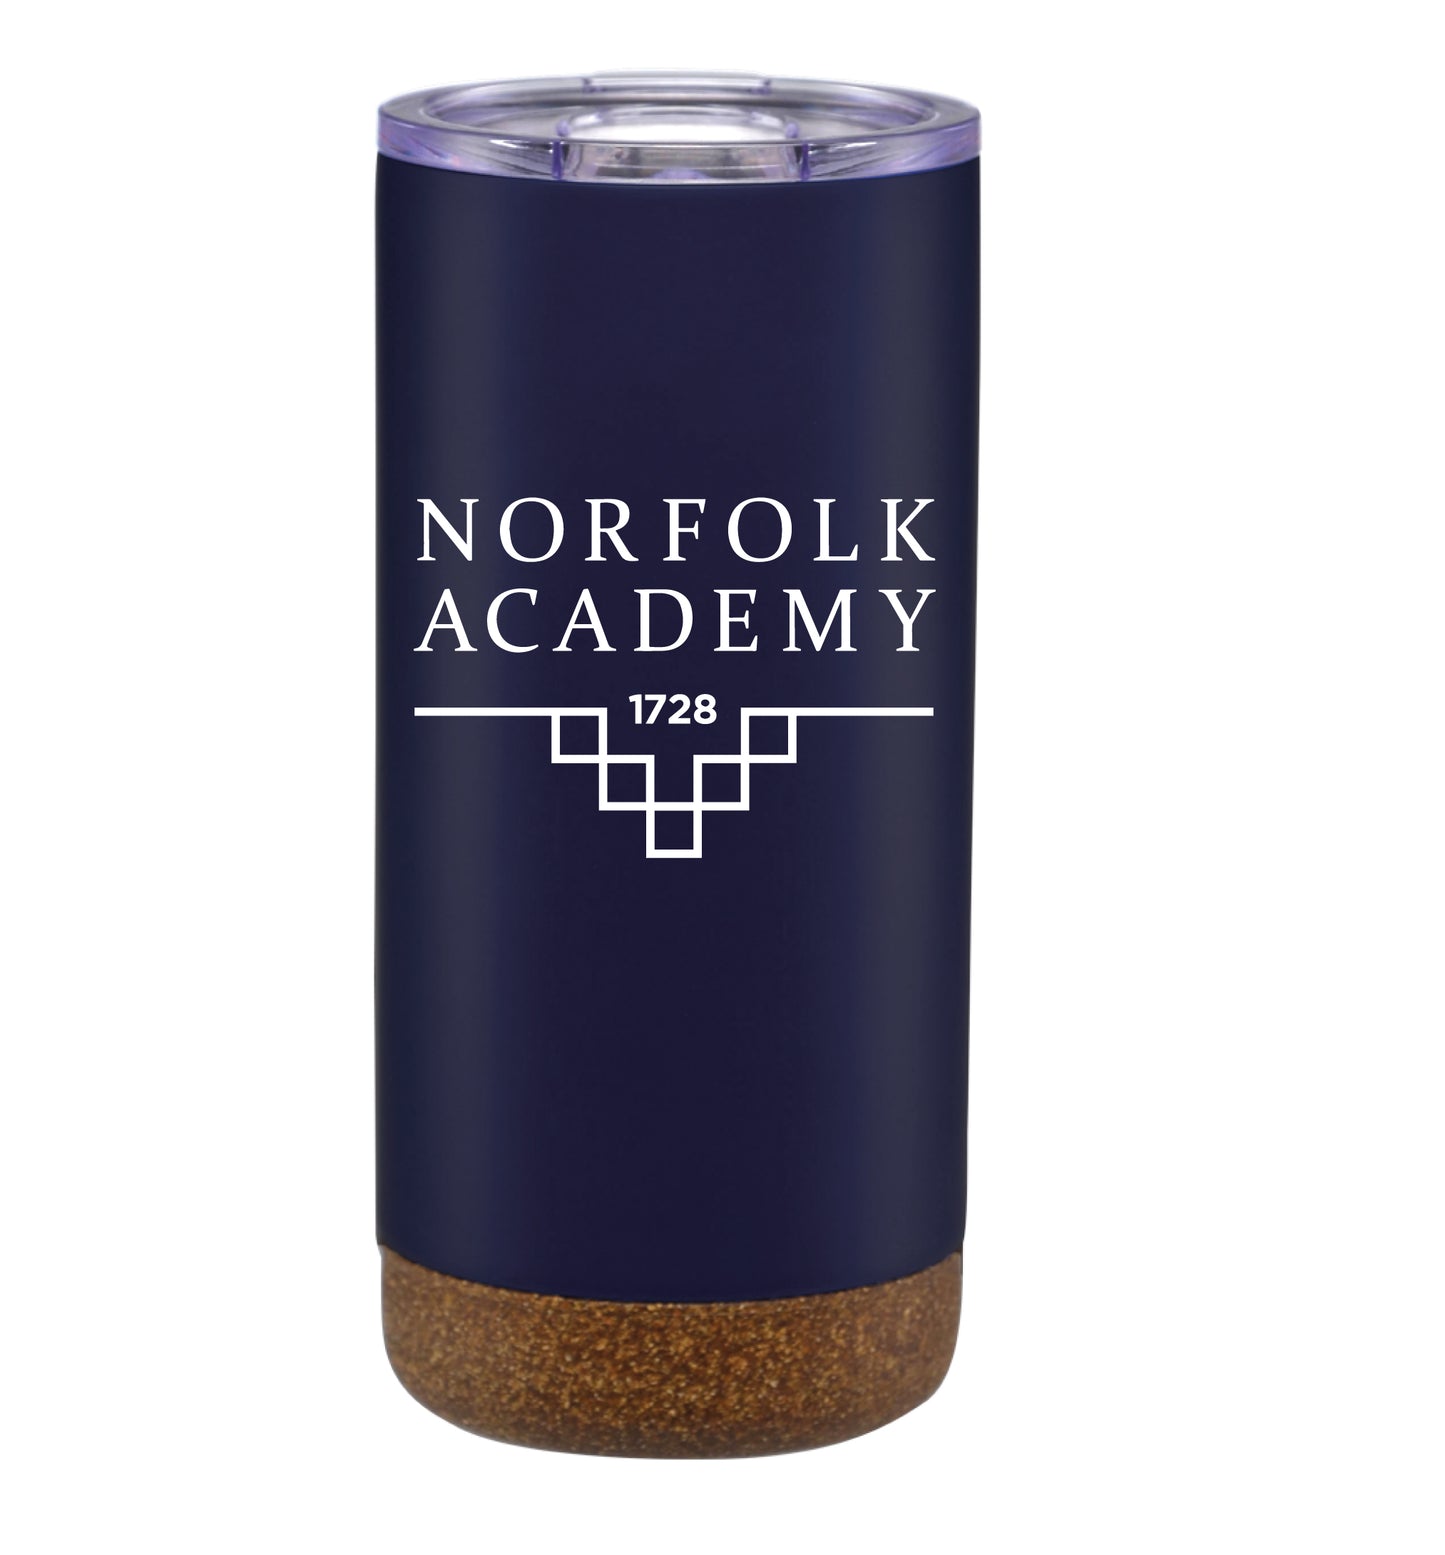 Norfolk Academy Coffee Tumbler - SALE